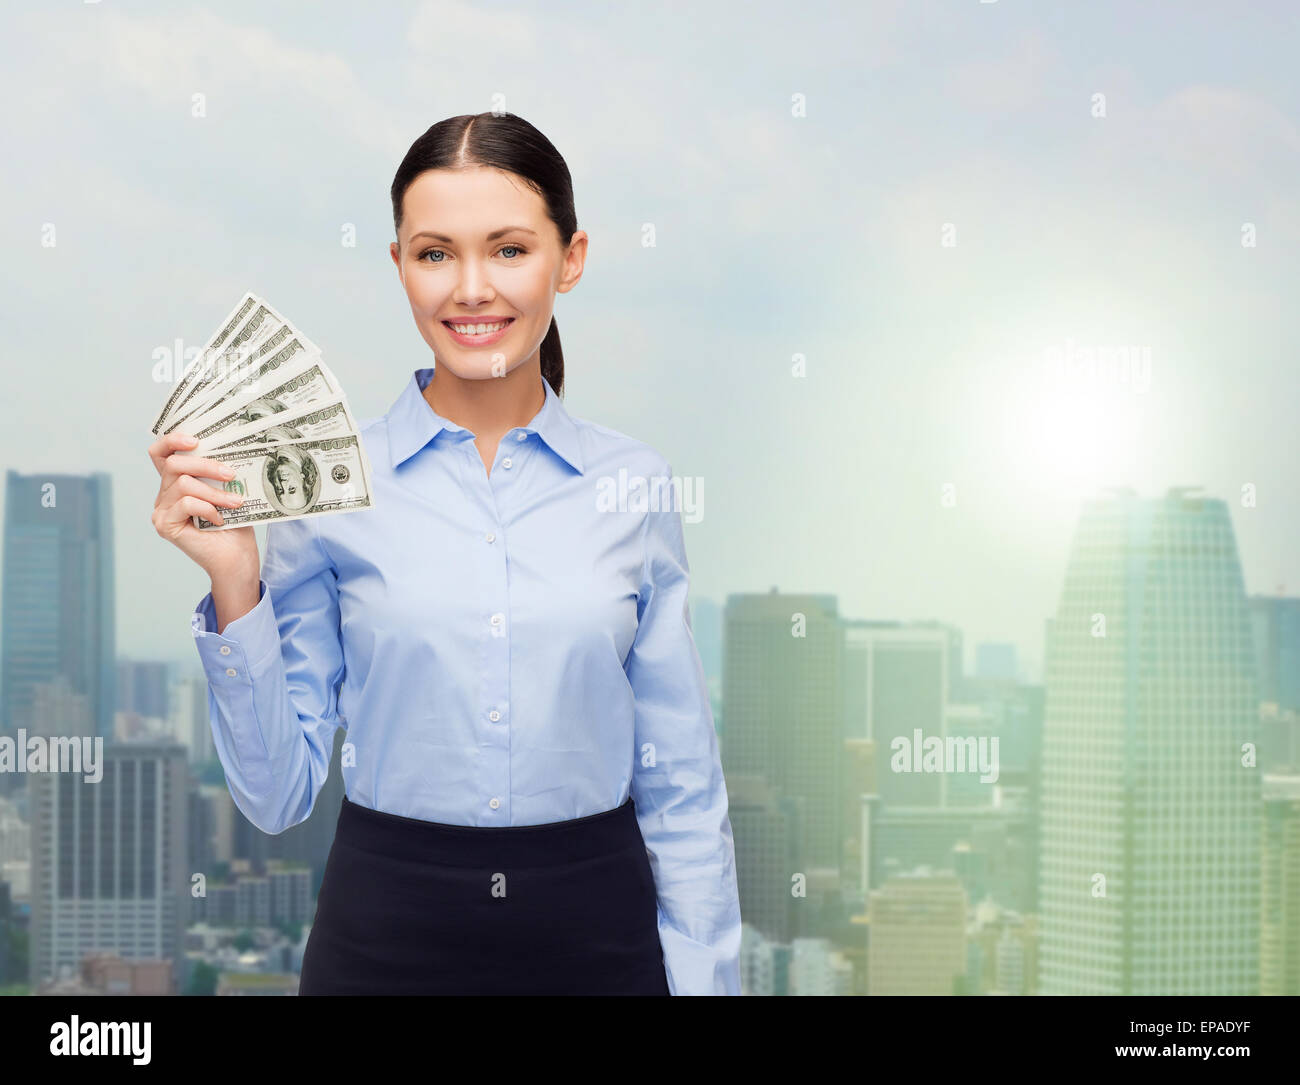 businesswoman with dollar cash money Stock Photo